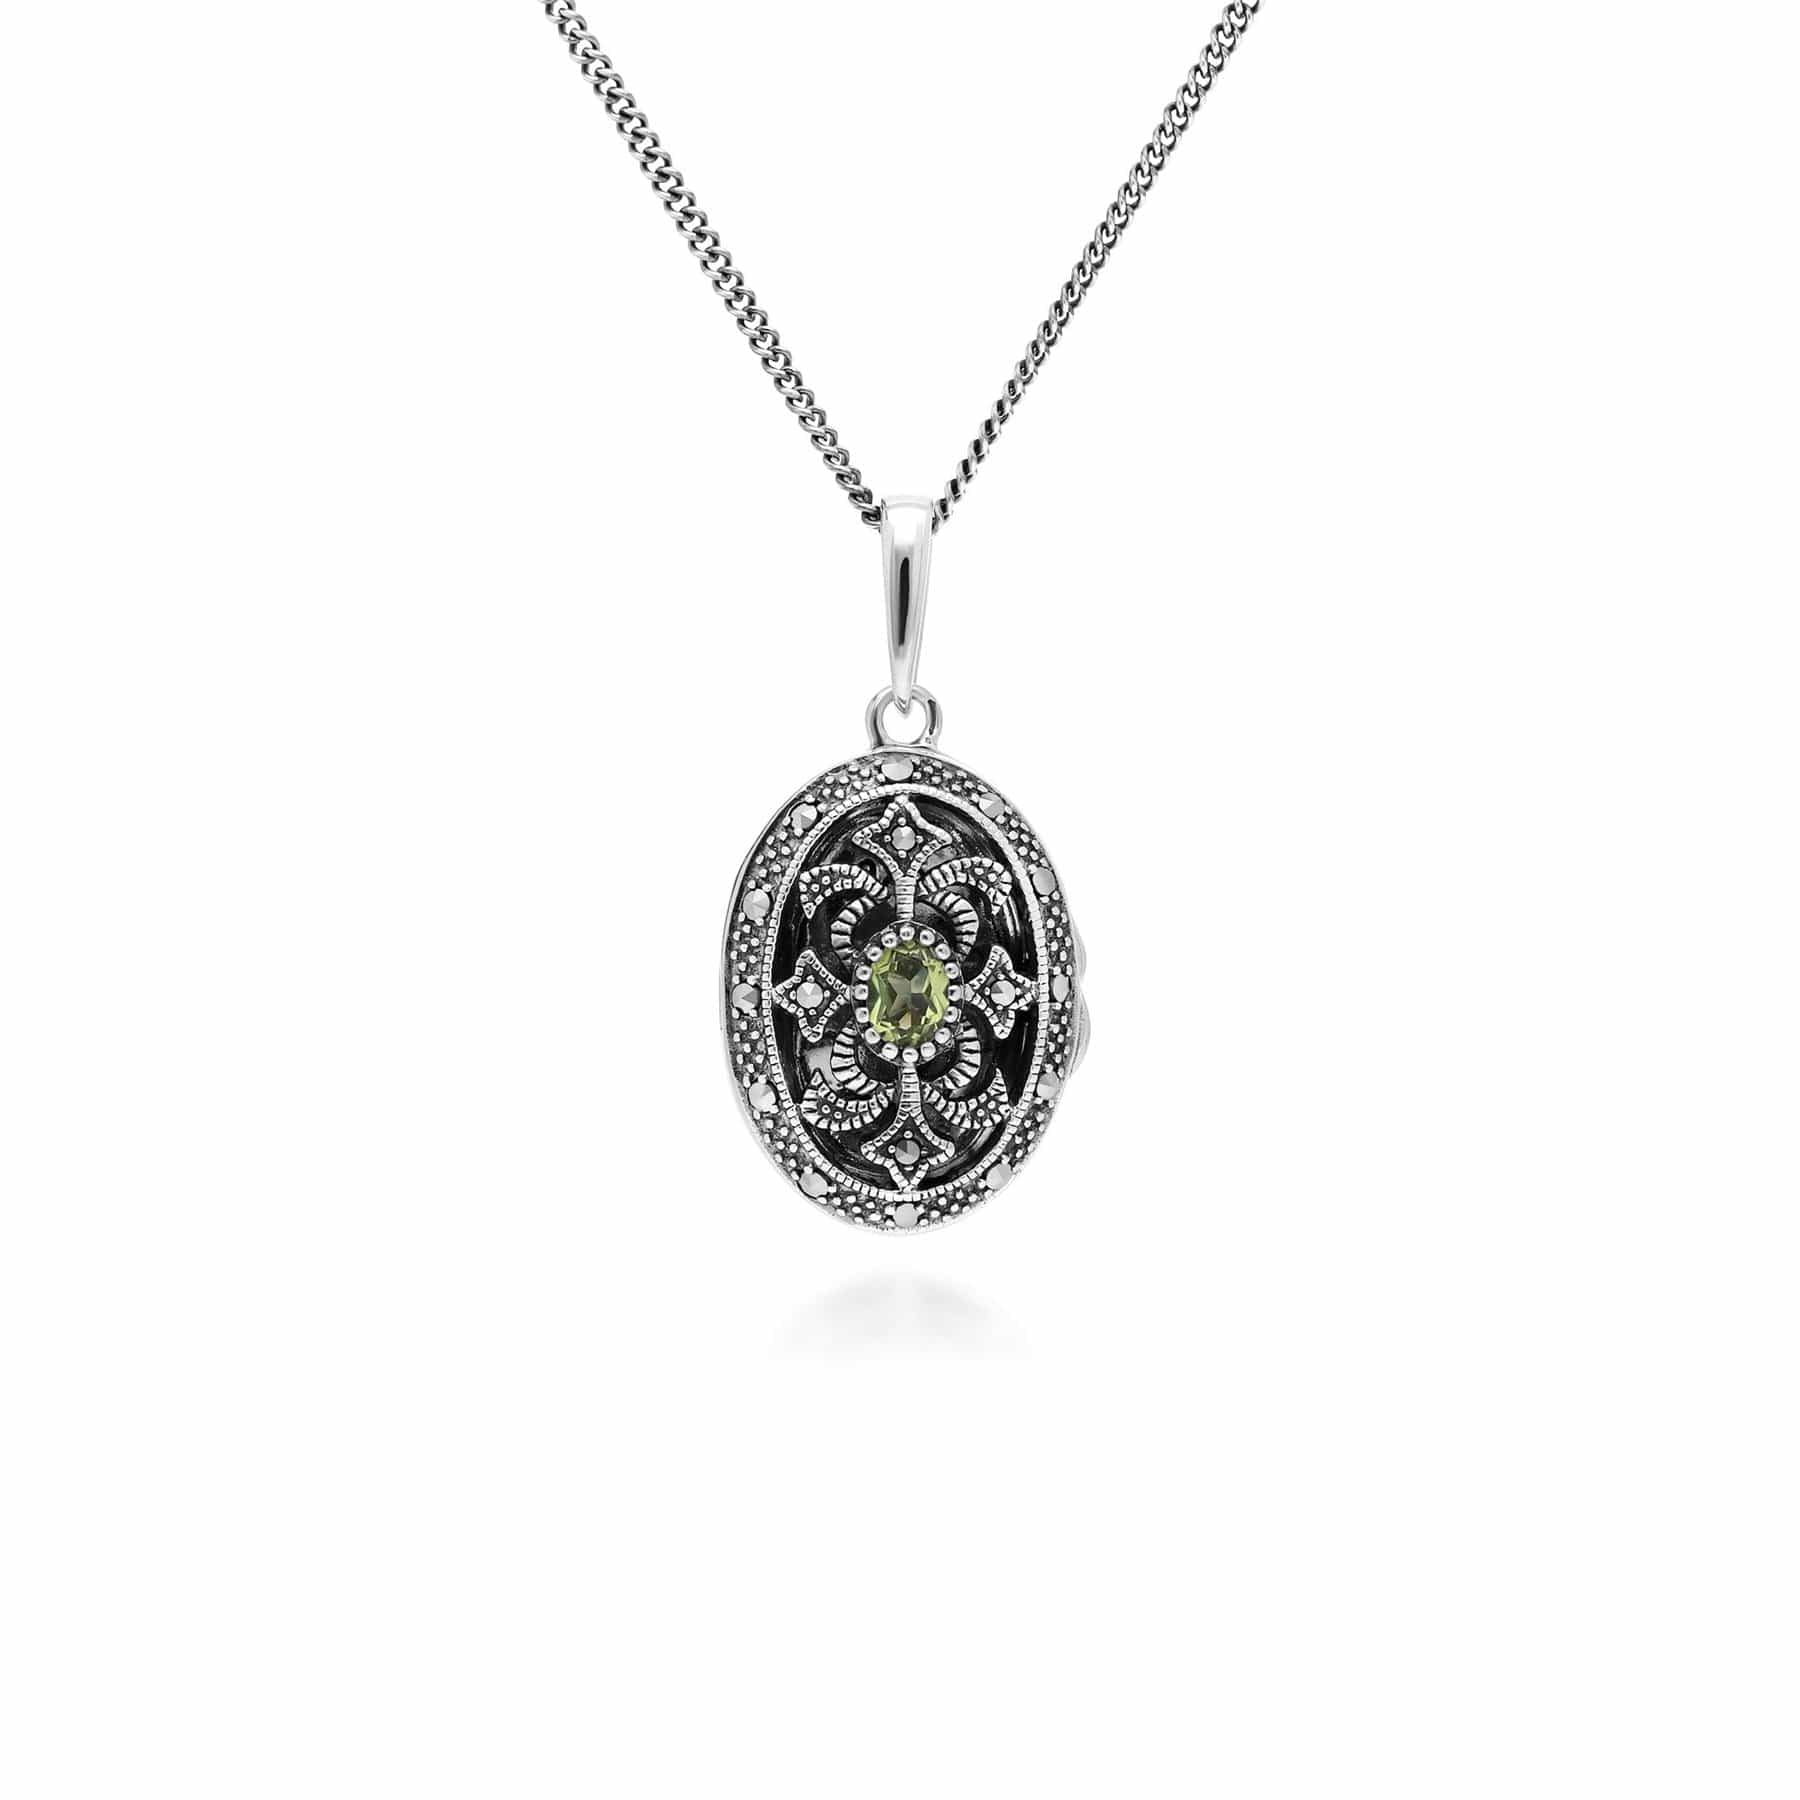 214N716207925 Art Nouveau Style Oval Peridot & Marcasite Locket Necklace in 925 Sterling Silver 1